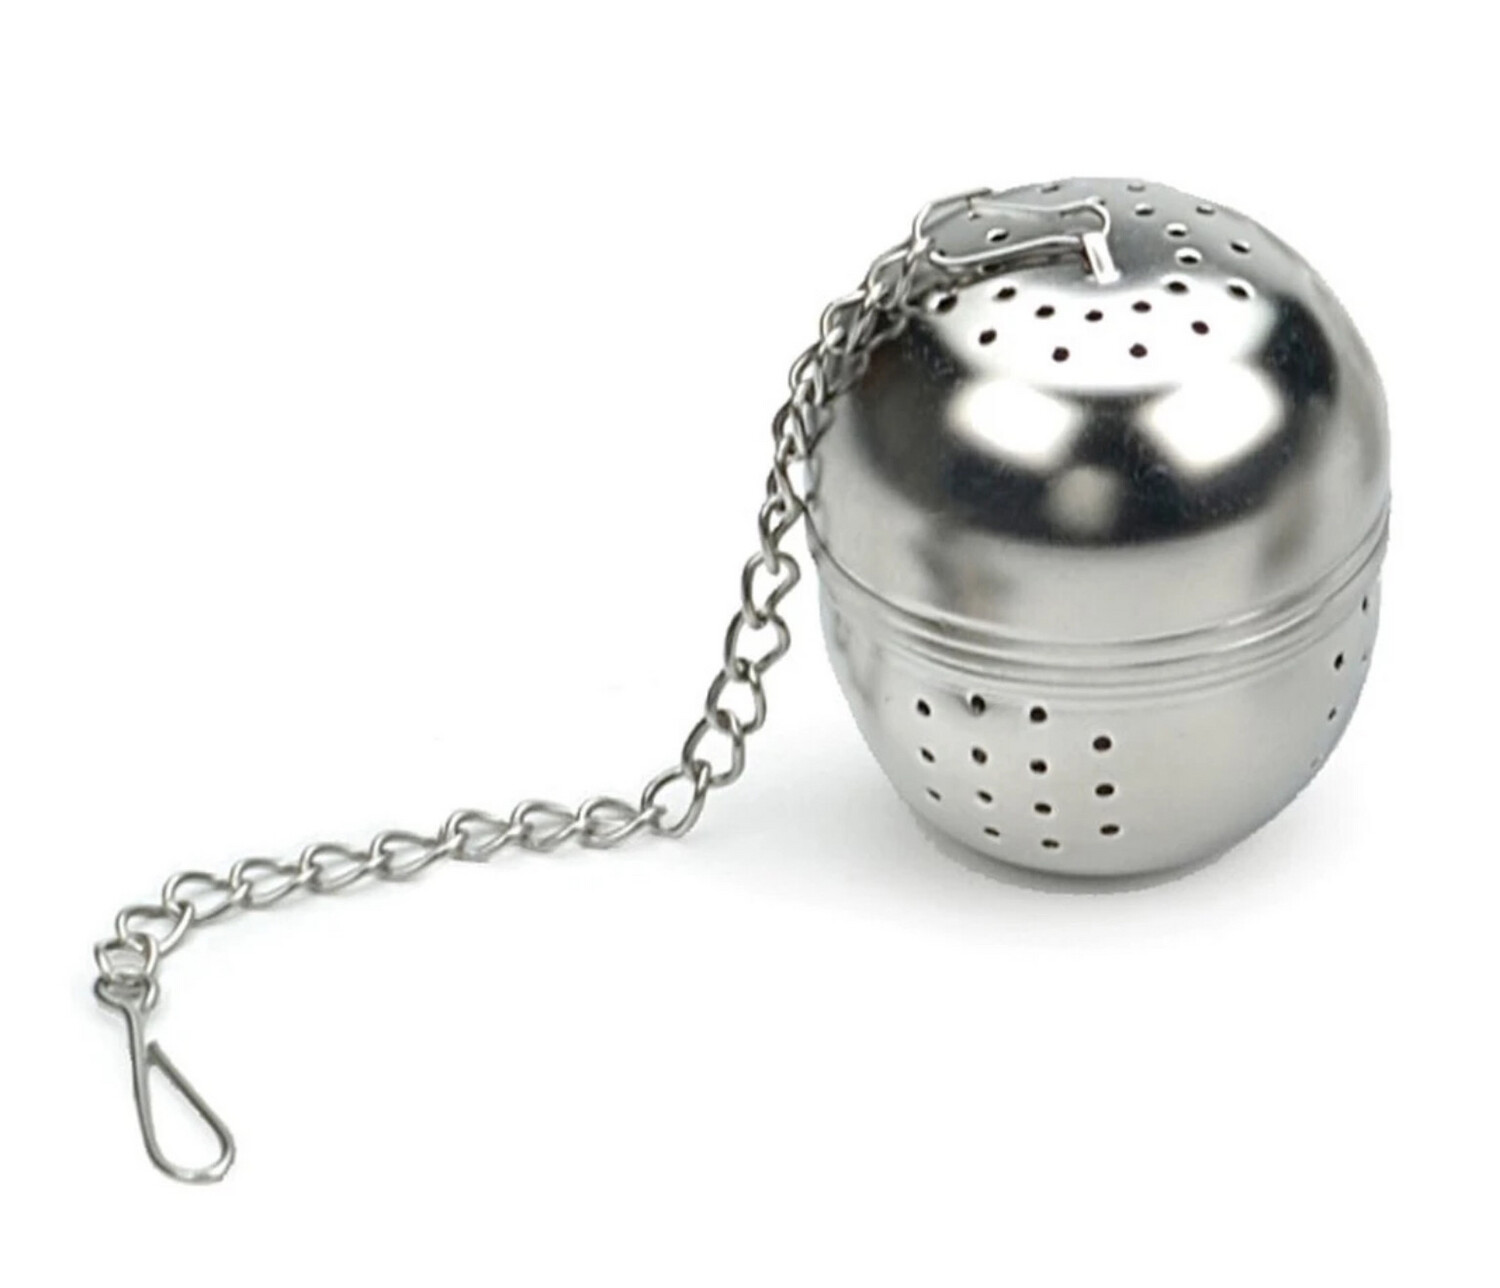 Stainless Steel Tea Ball Tea Infuser